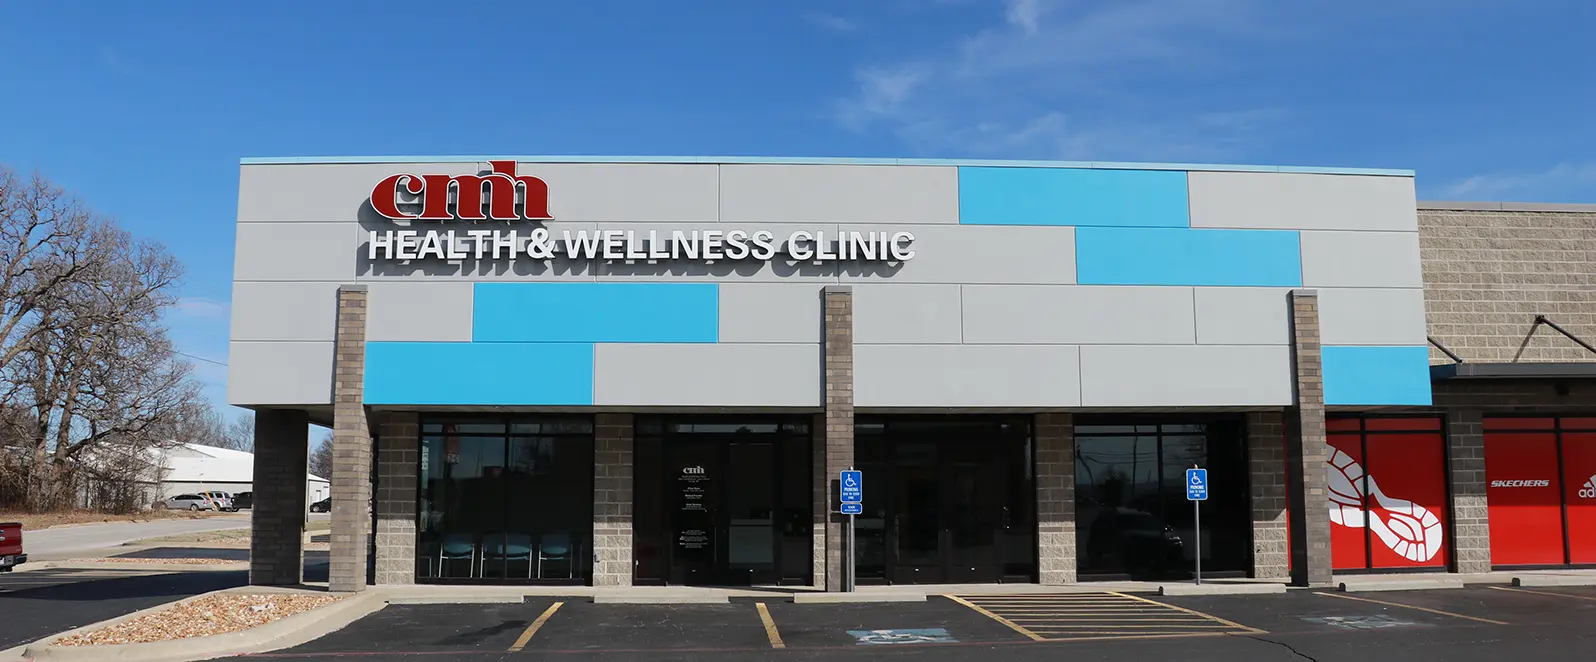 CMH Health & Wellness Clinic building exterior